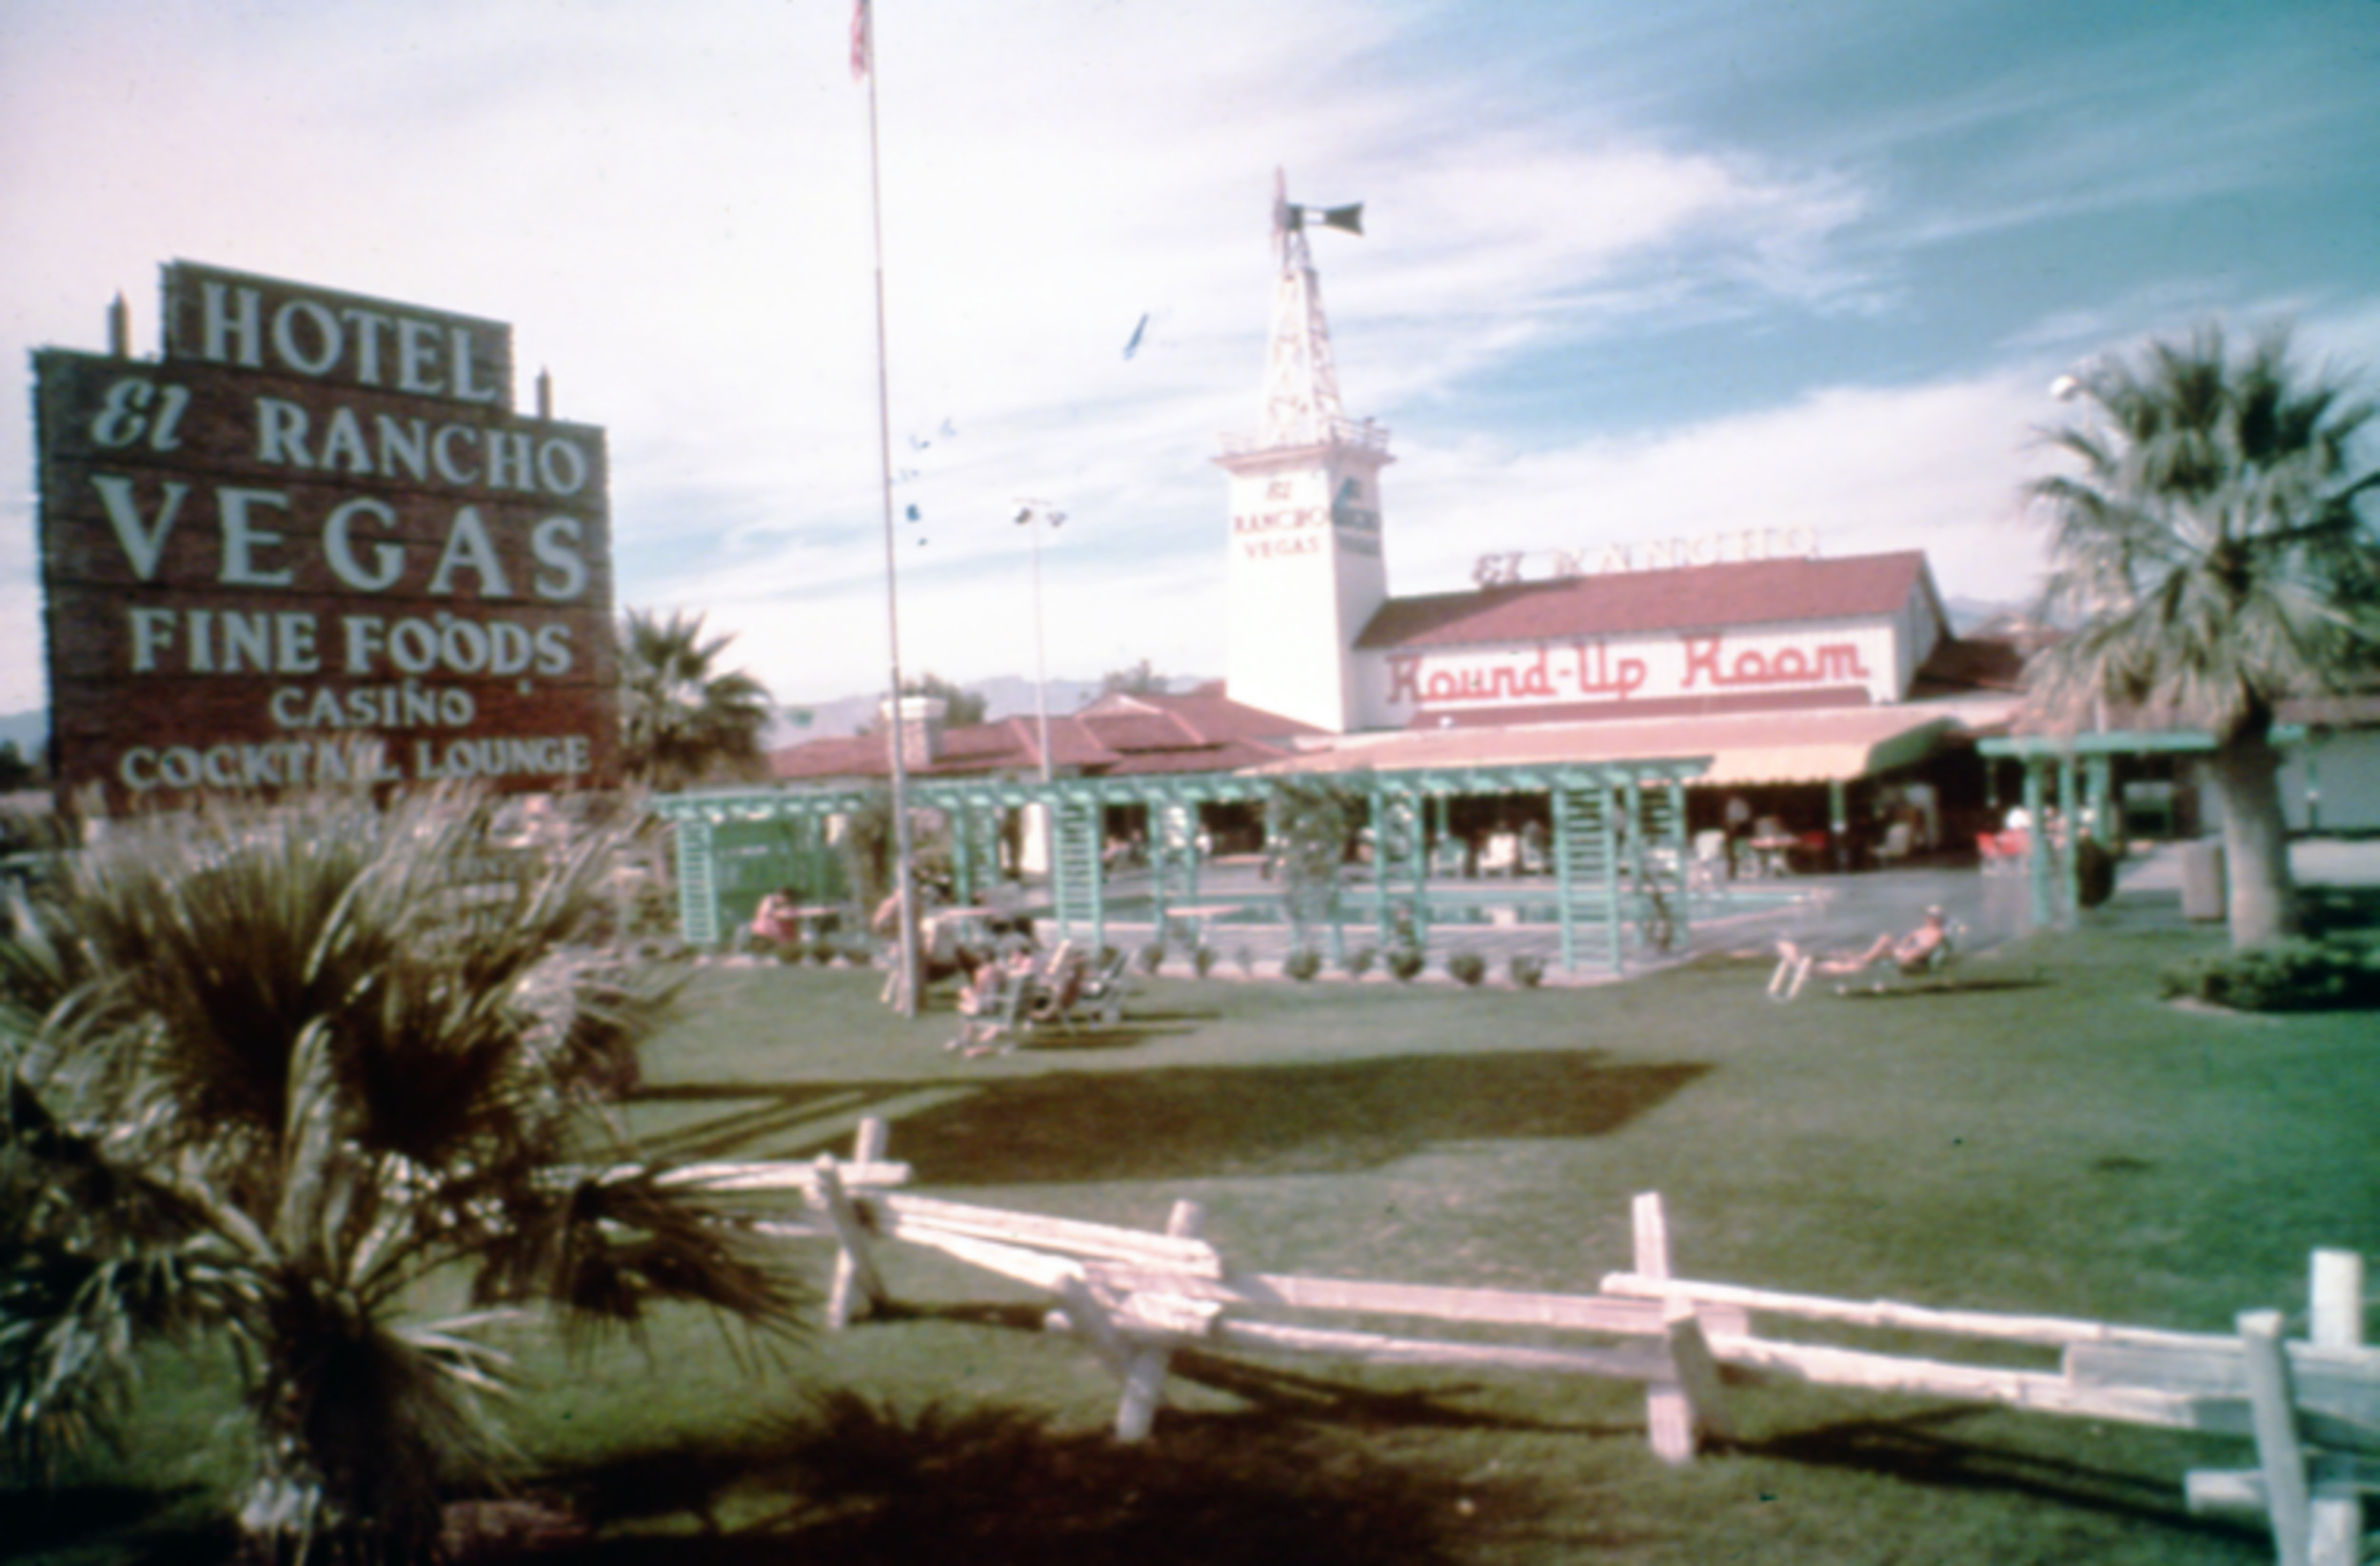 Slide of the Hotel El Rancho Vegas, Las Vegas, circa 1940s